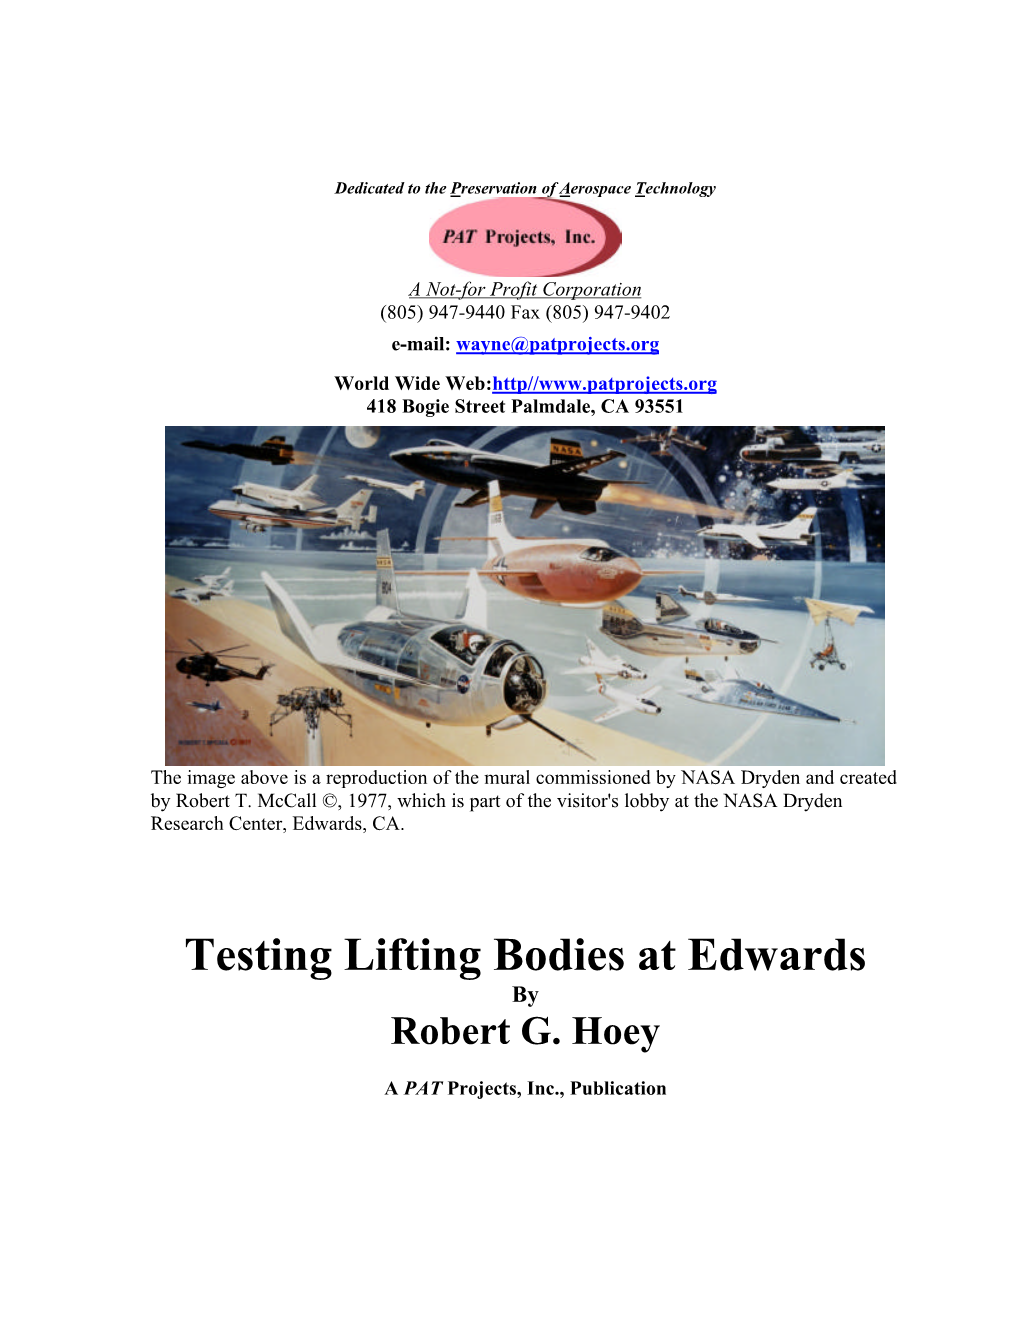 Testing Lifting Bodies at Edwards by Robert G